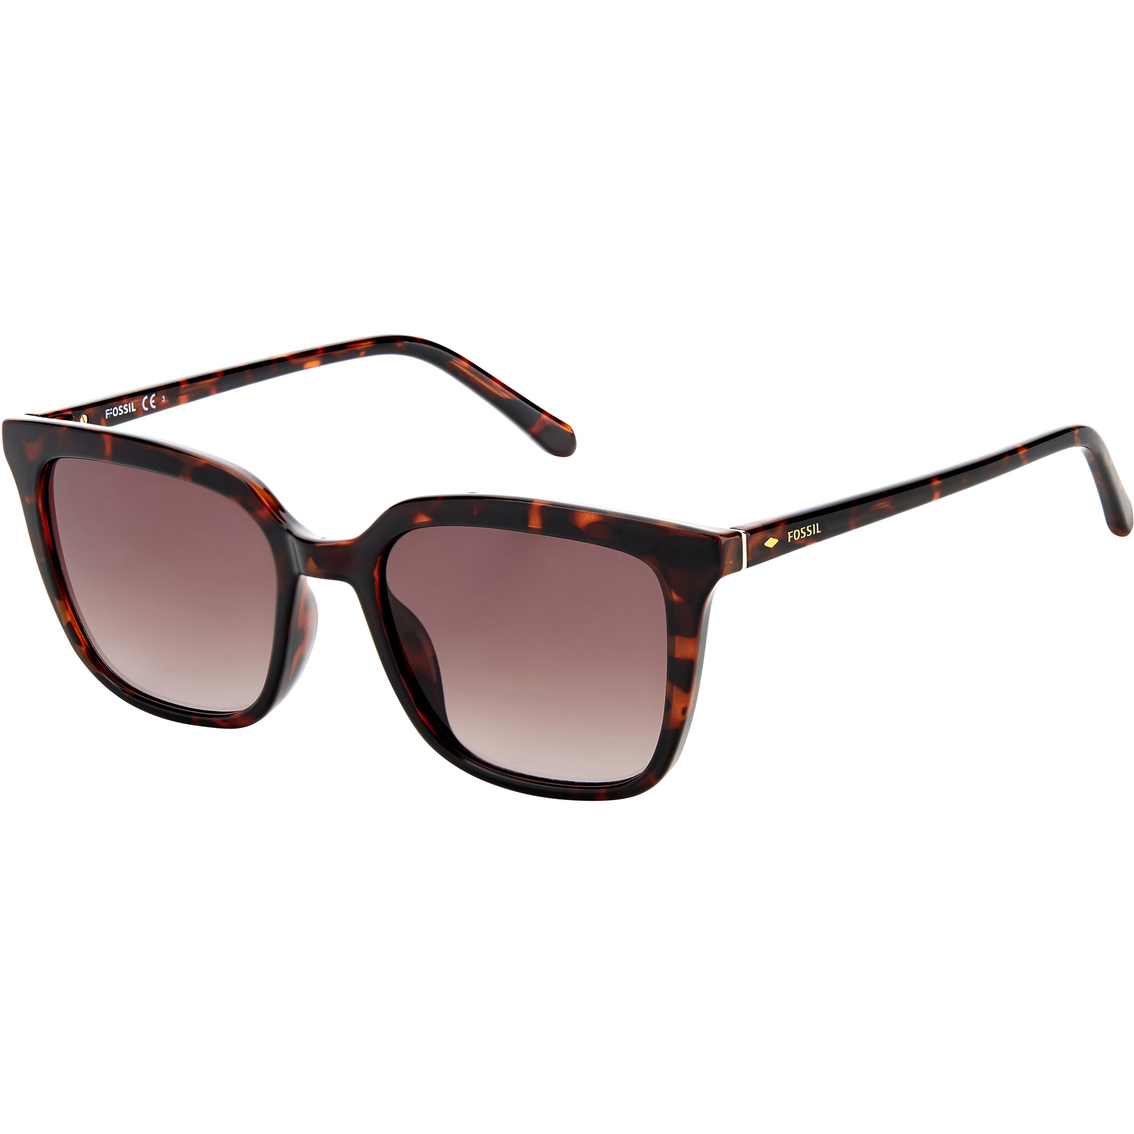 Fossil Rectangular Sunglasses Fos3112 | Women's Sunglasses | Clothing ...